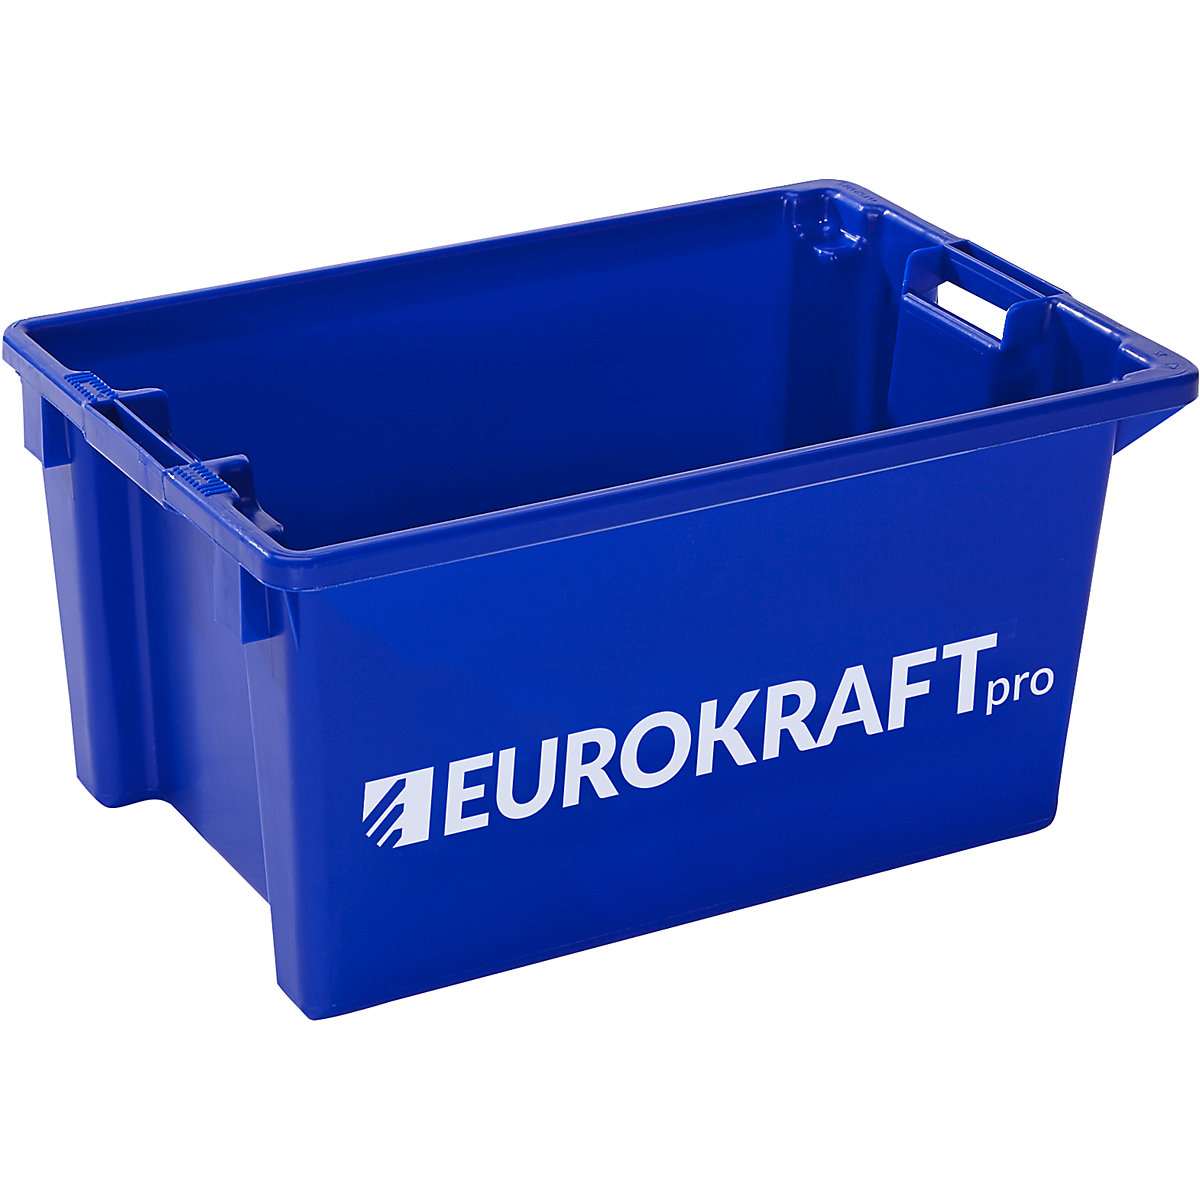 Drehstapelbehälter eurokraft pro, Volumen 50 l, VE 3 Stk, blau